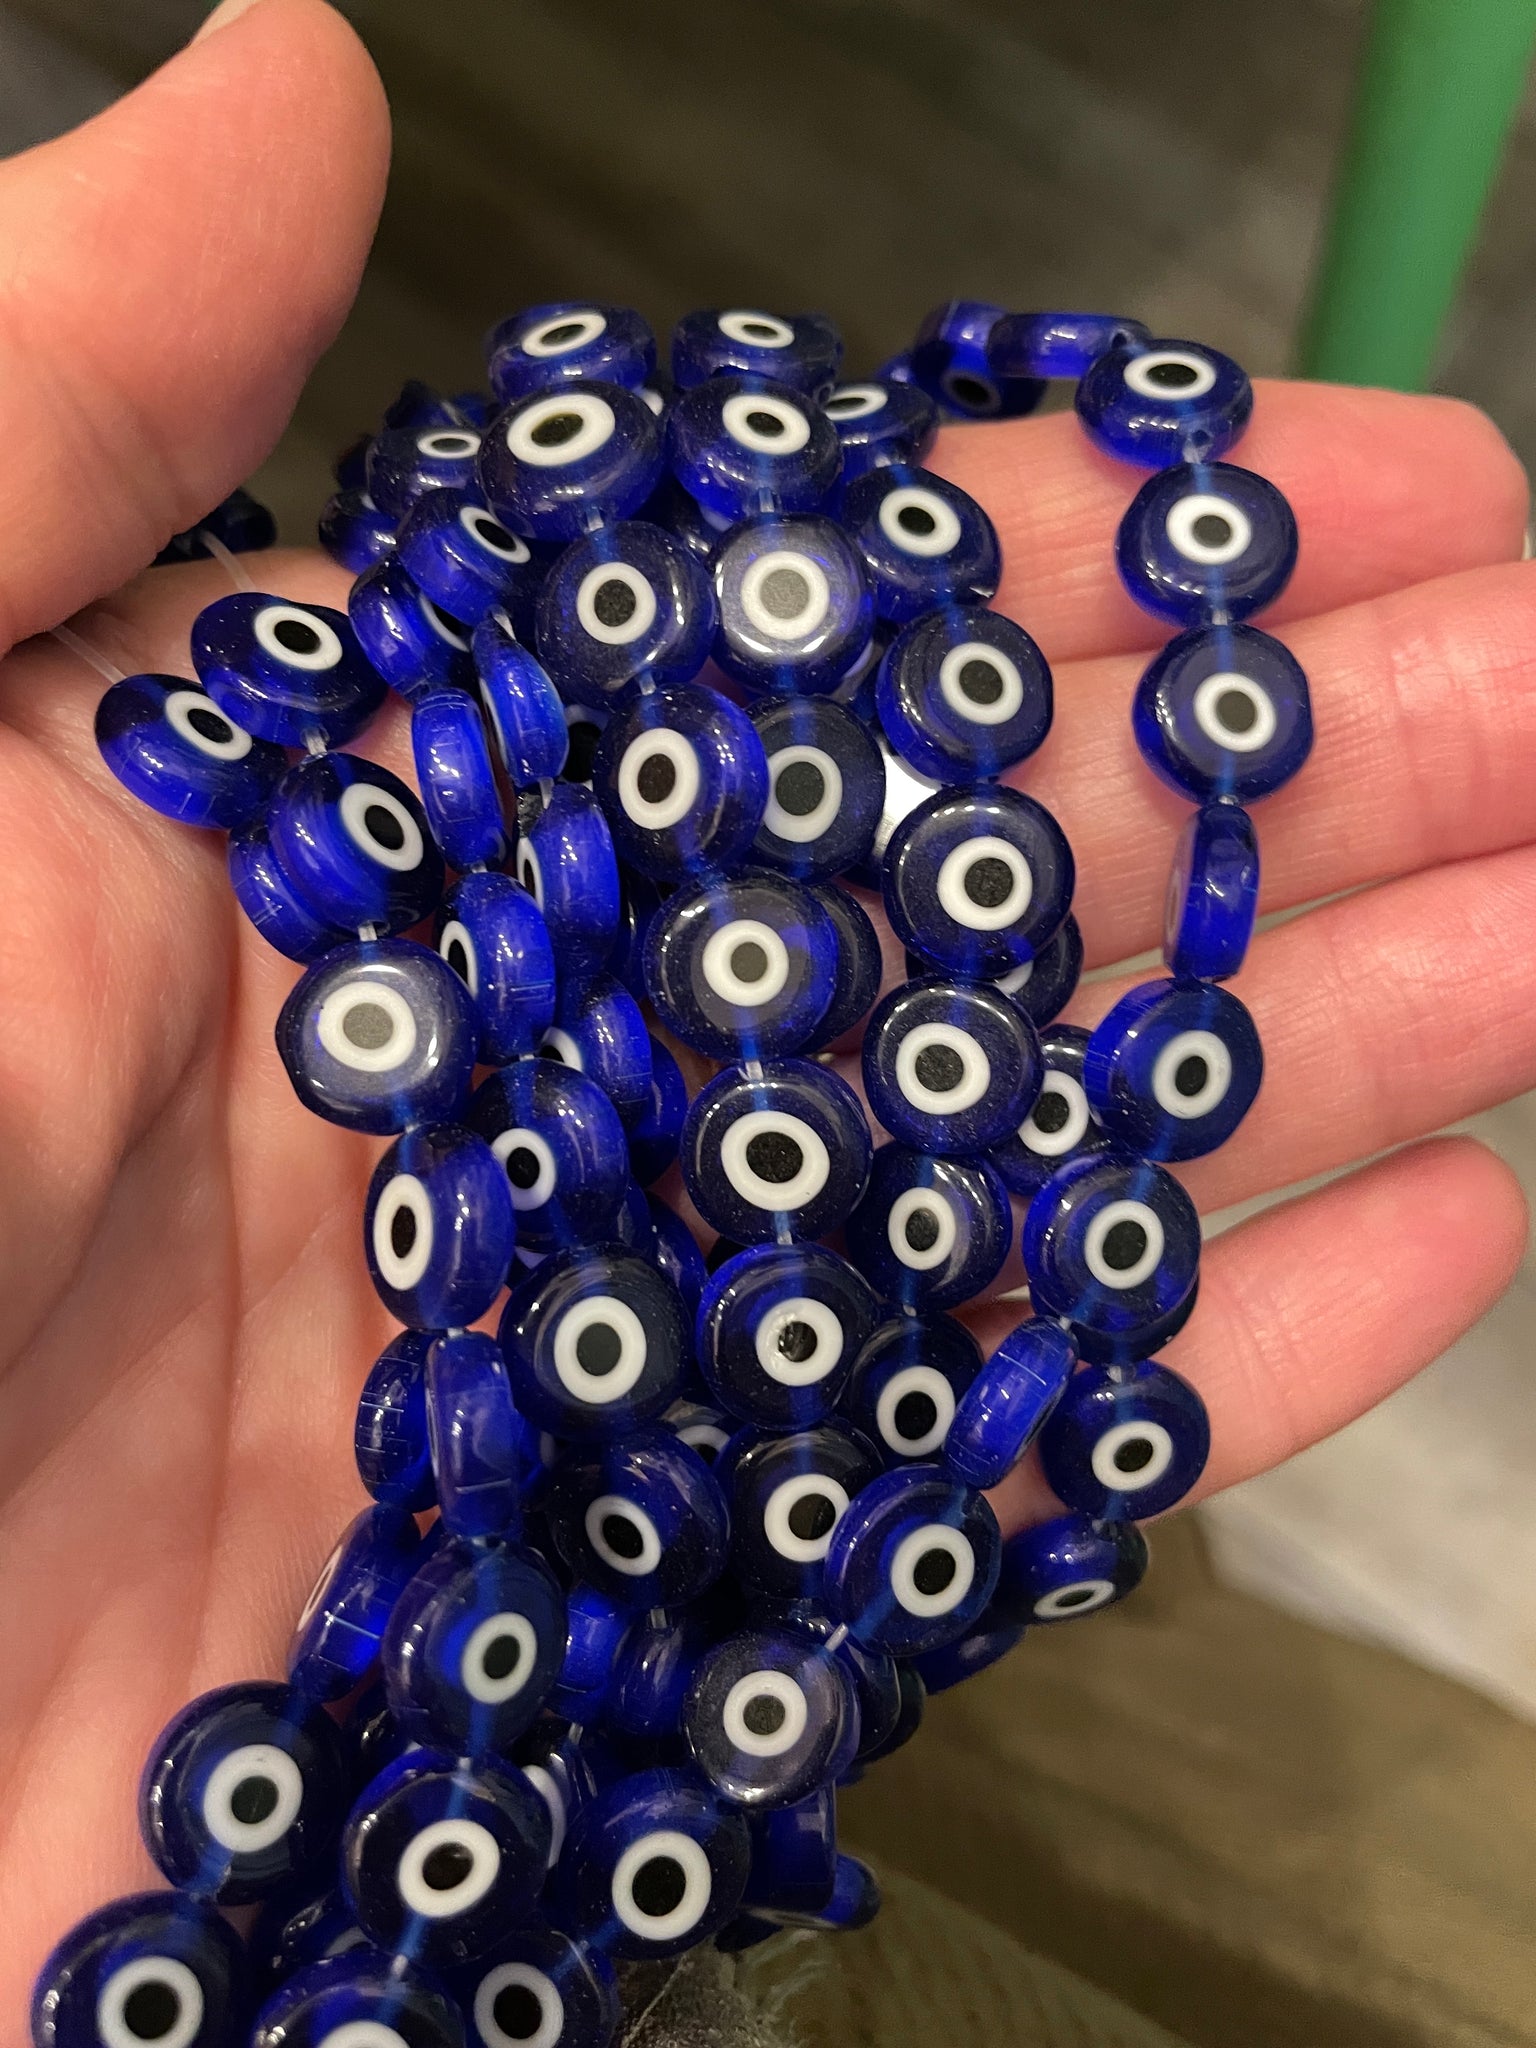 Hangine 300Pcs Evil Eye Beads for Jewelry Making,8mm Nigeria